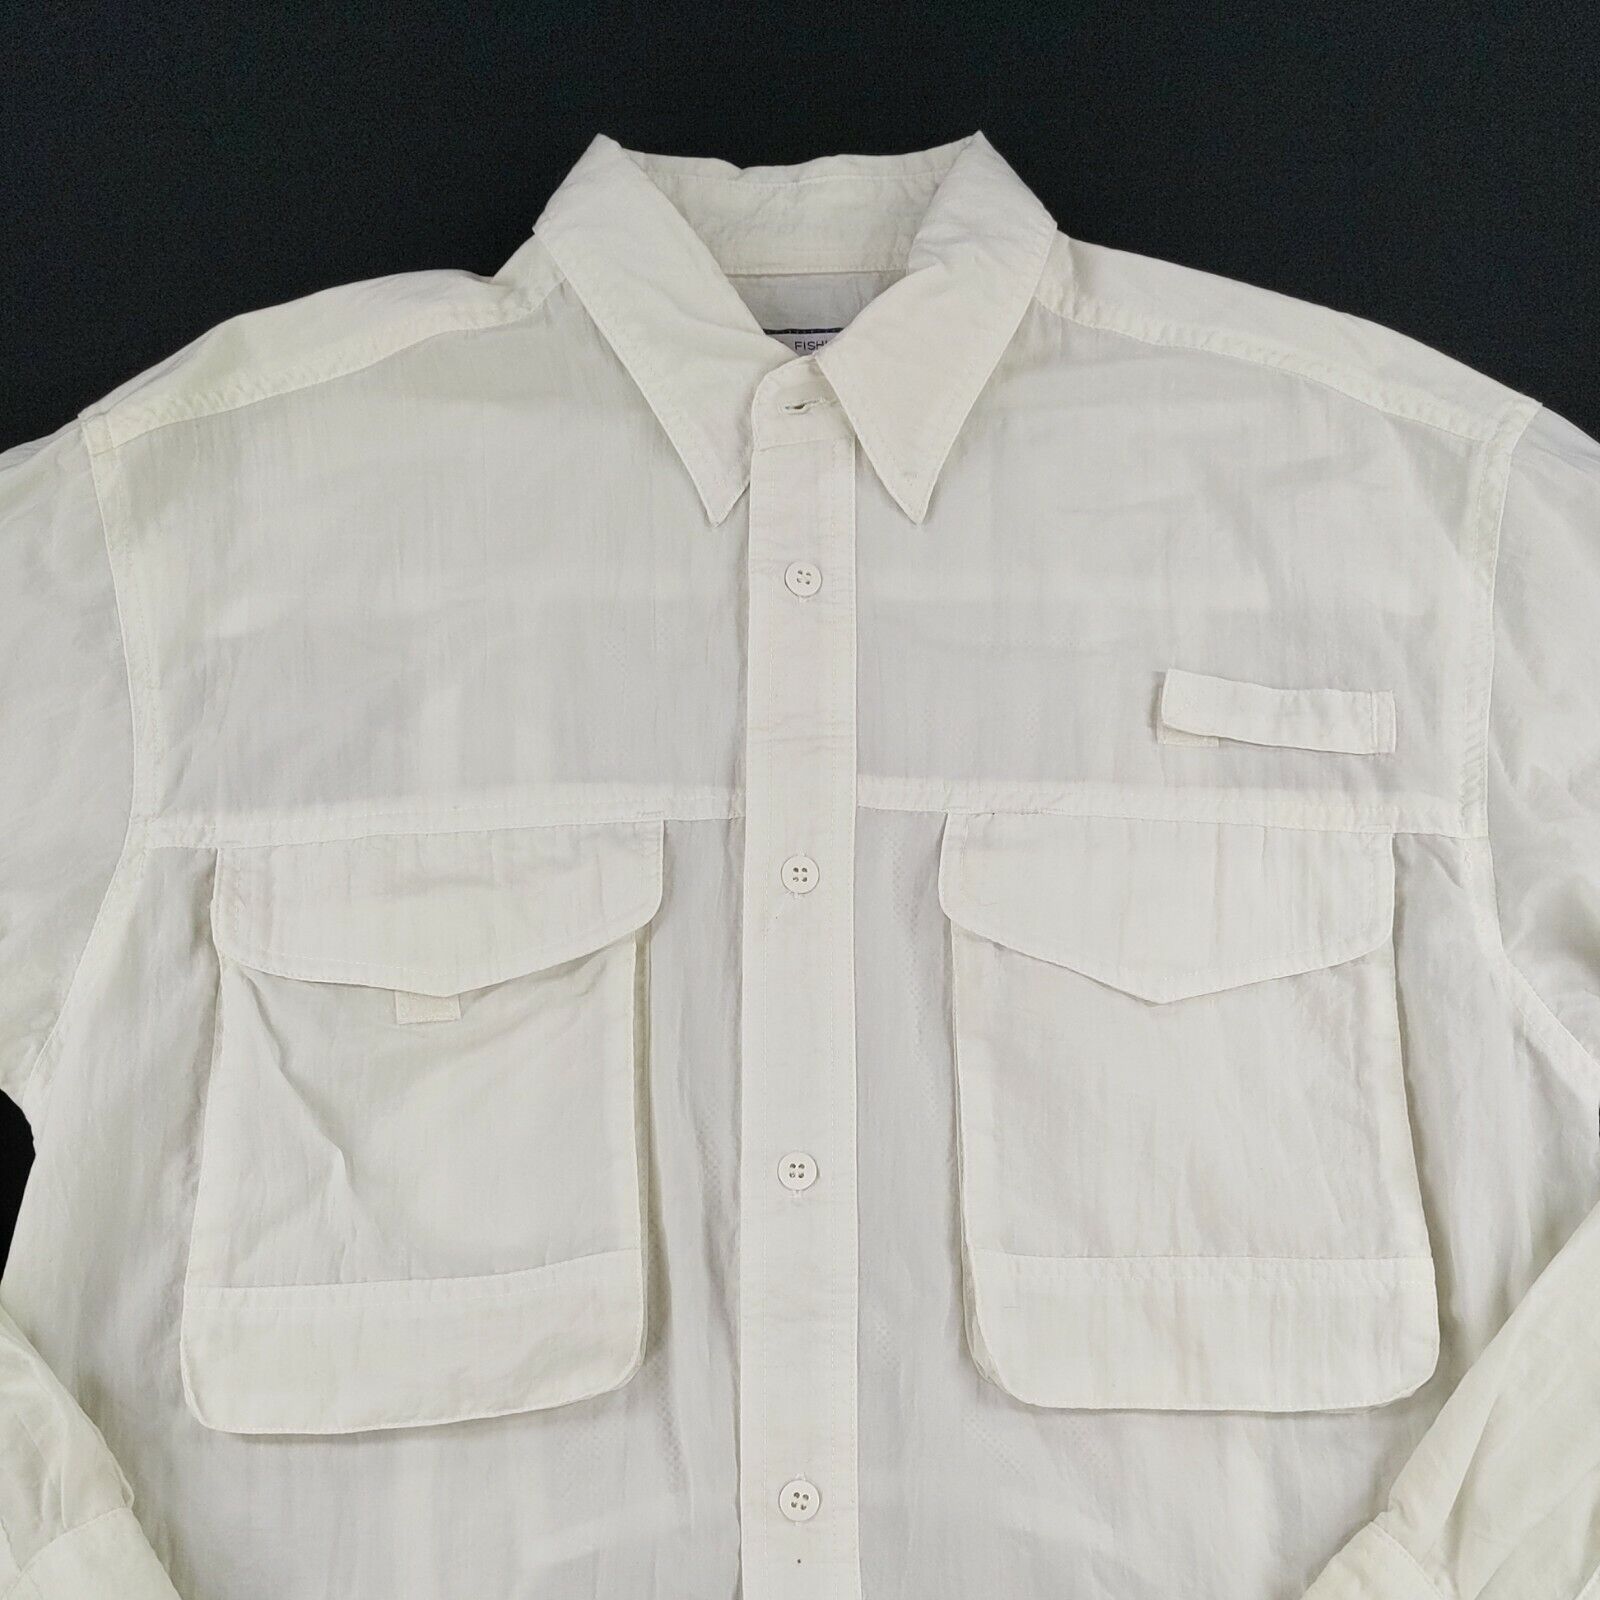 Penn Reels Authentic Fishing Gear Mens Long Sleeve Shirt Size M